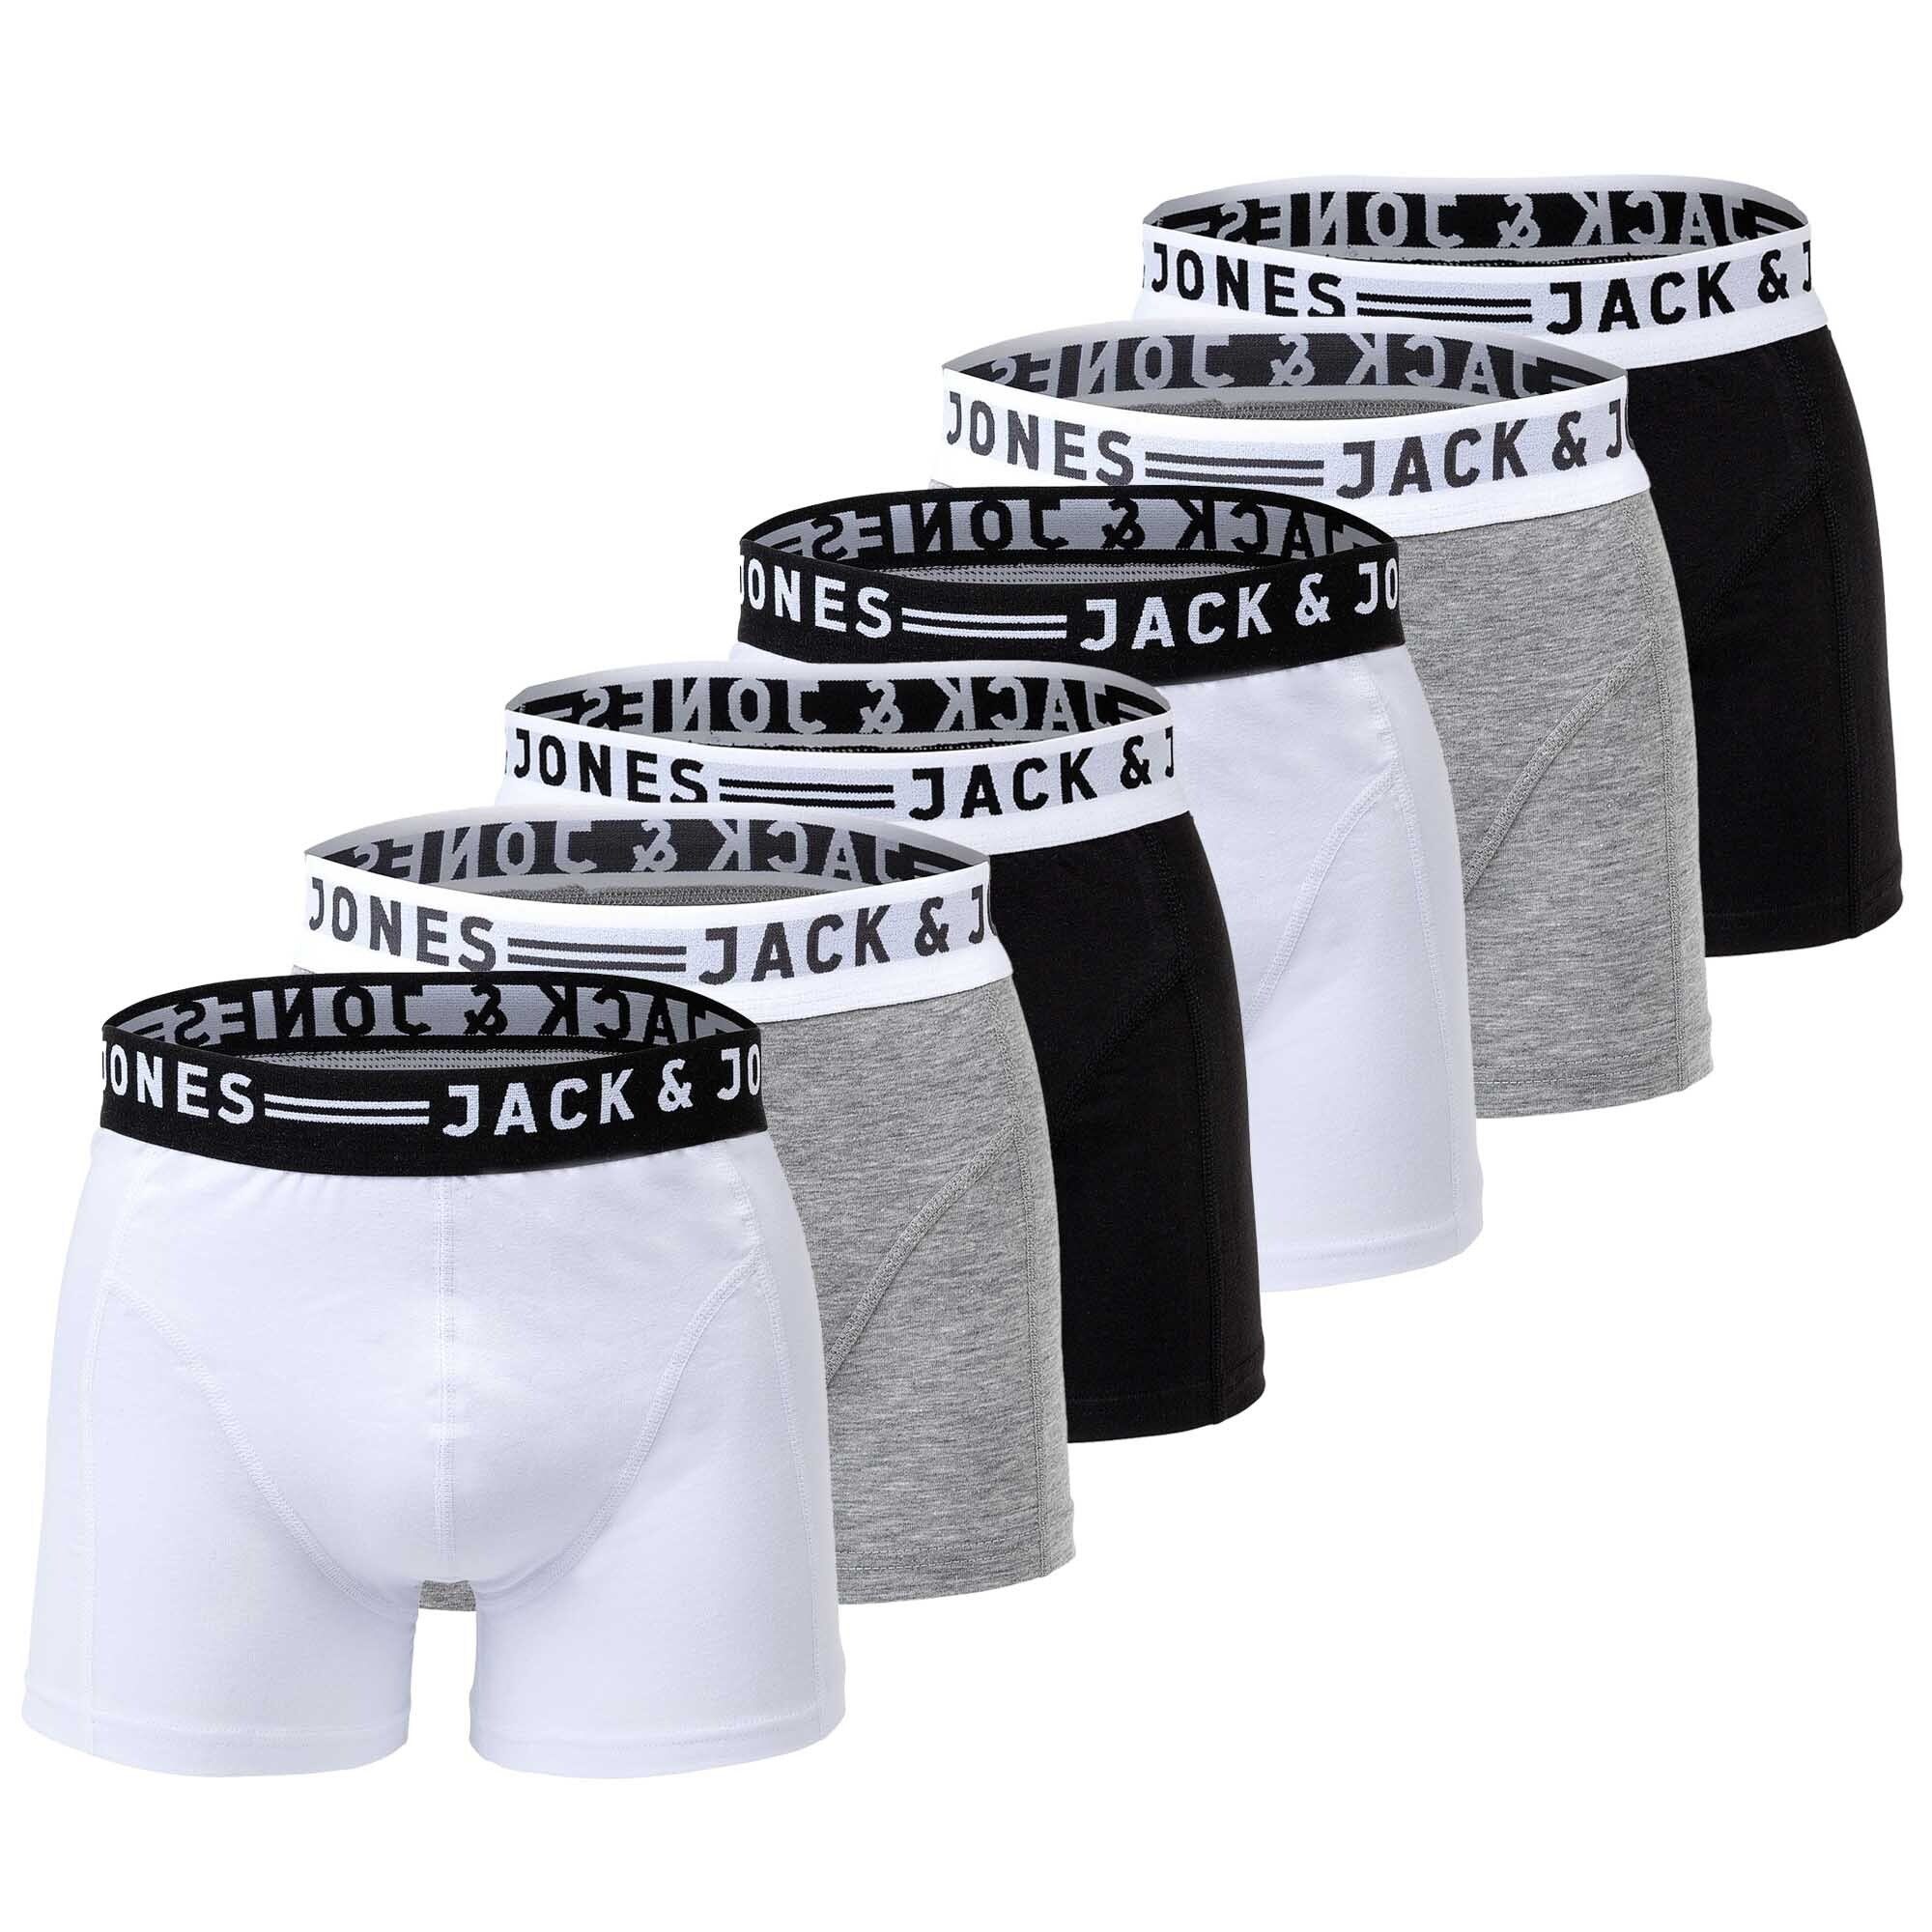 Jack & Jones Boxer Herren Boxer Shorts, 6er Pack - SENSE TRUNKS Schwarz/Grau/Weiß